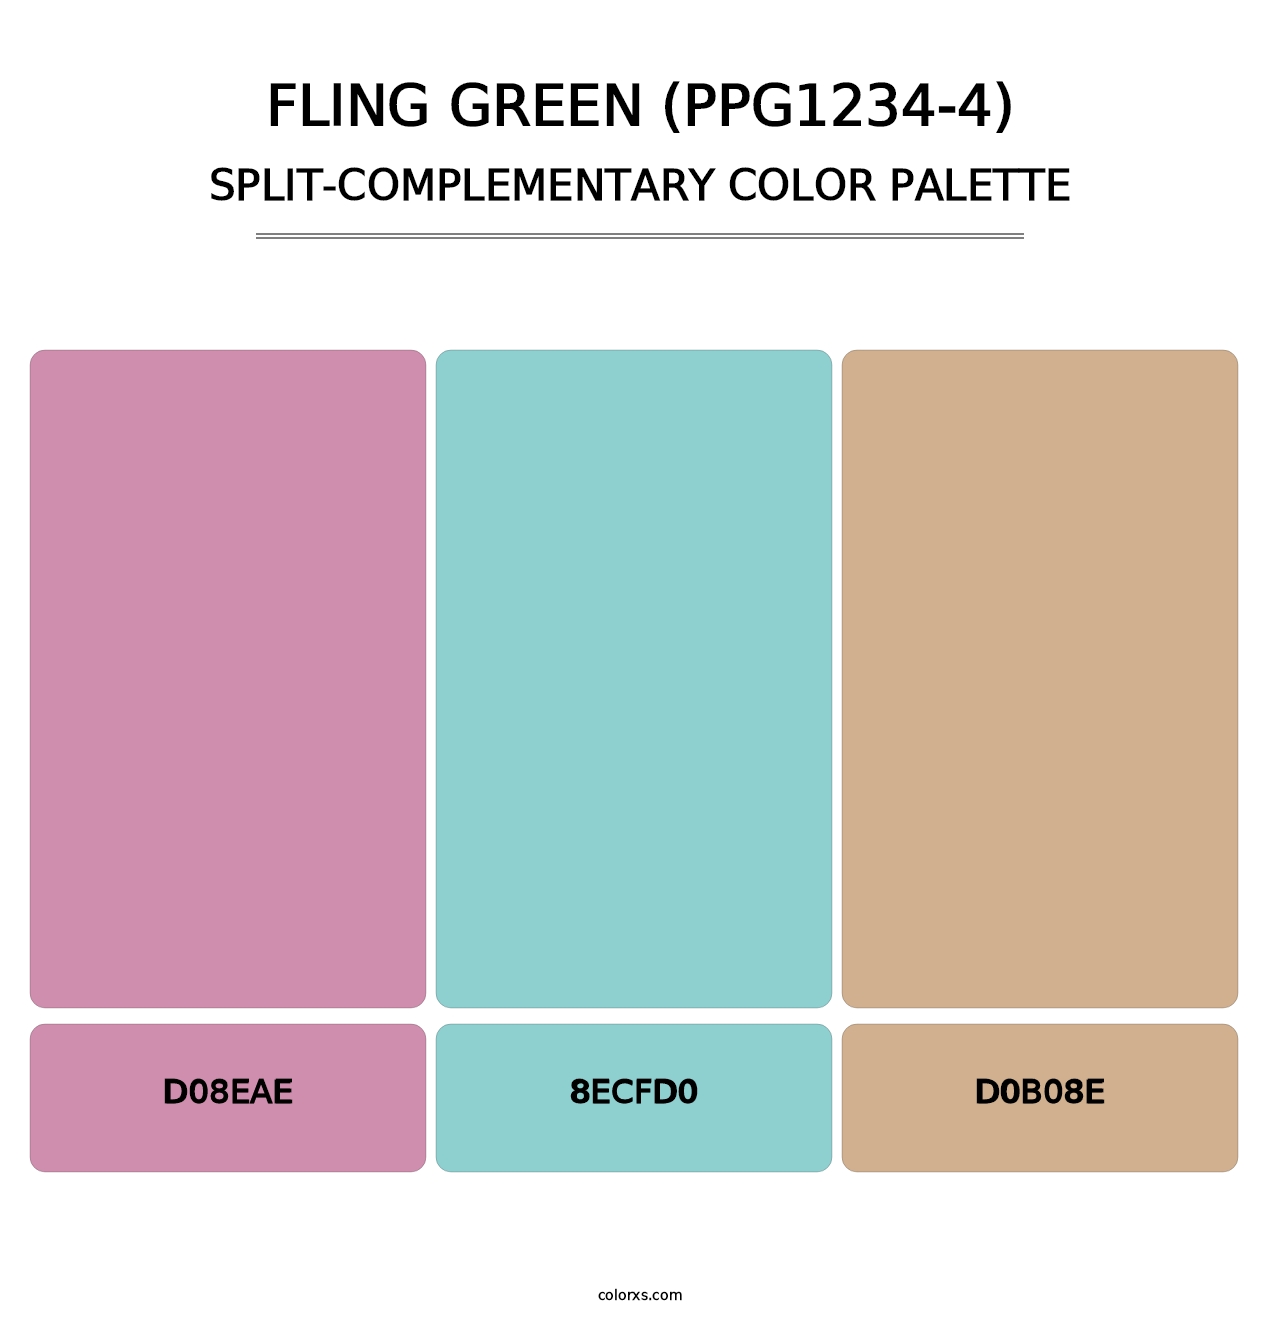 Fling Green (PPG1234-4) - Split-Complementary Color Palette